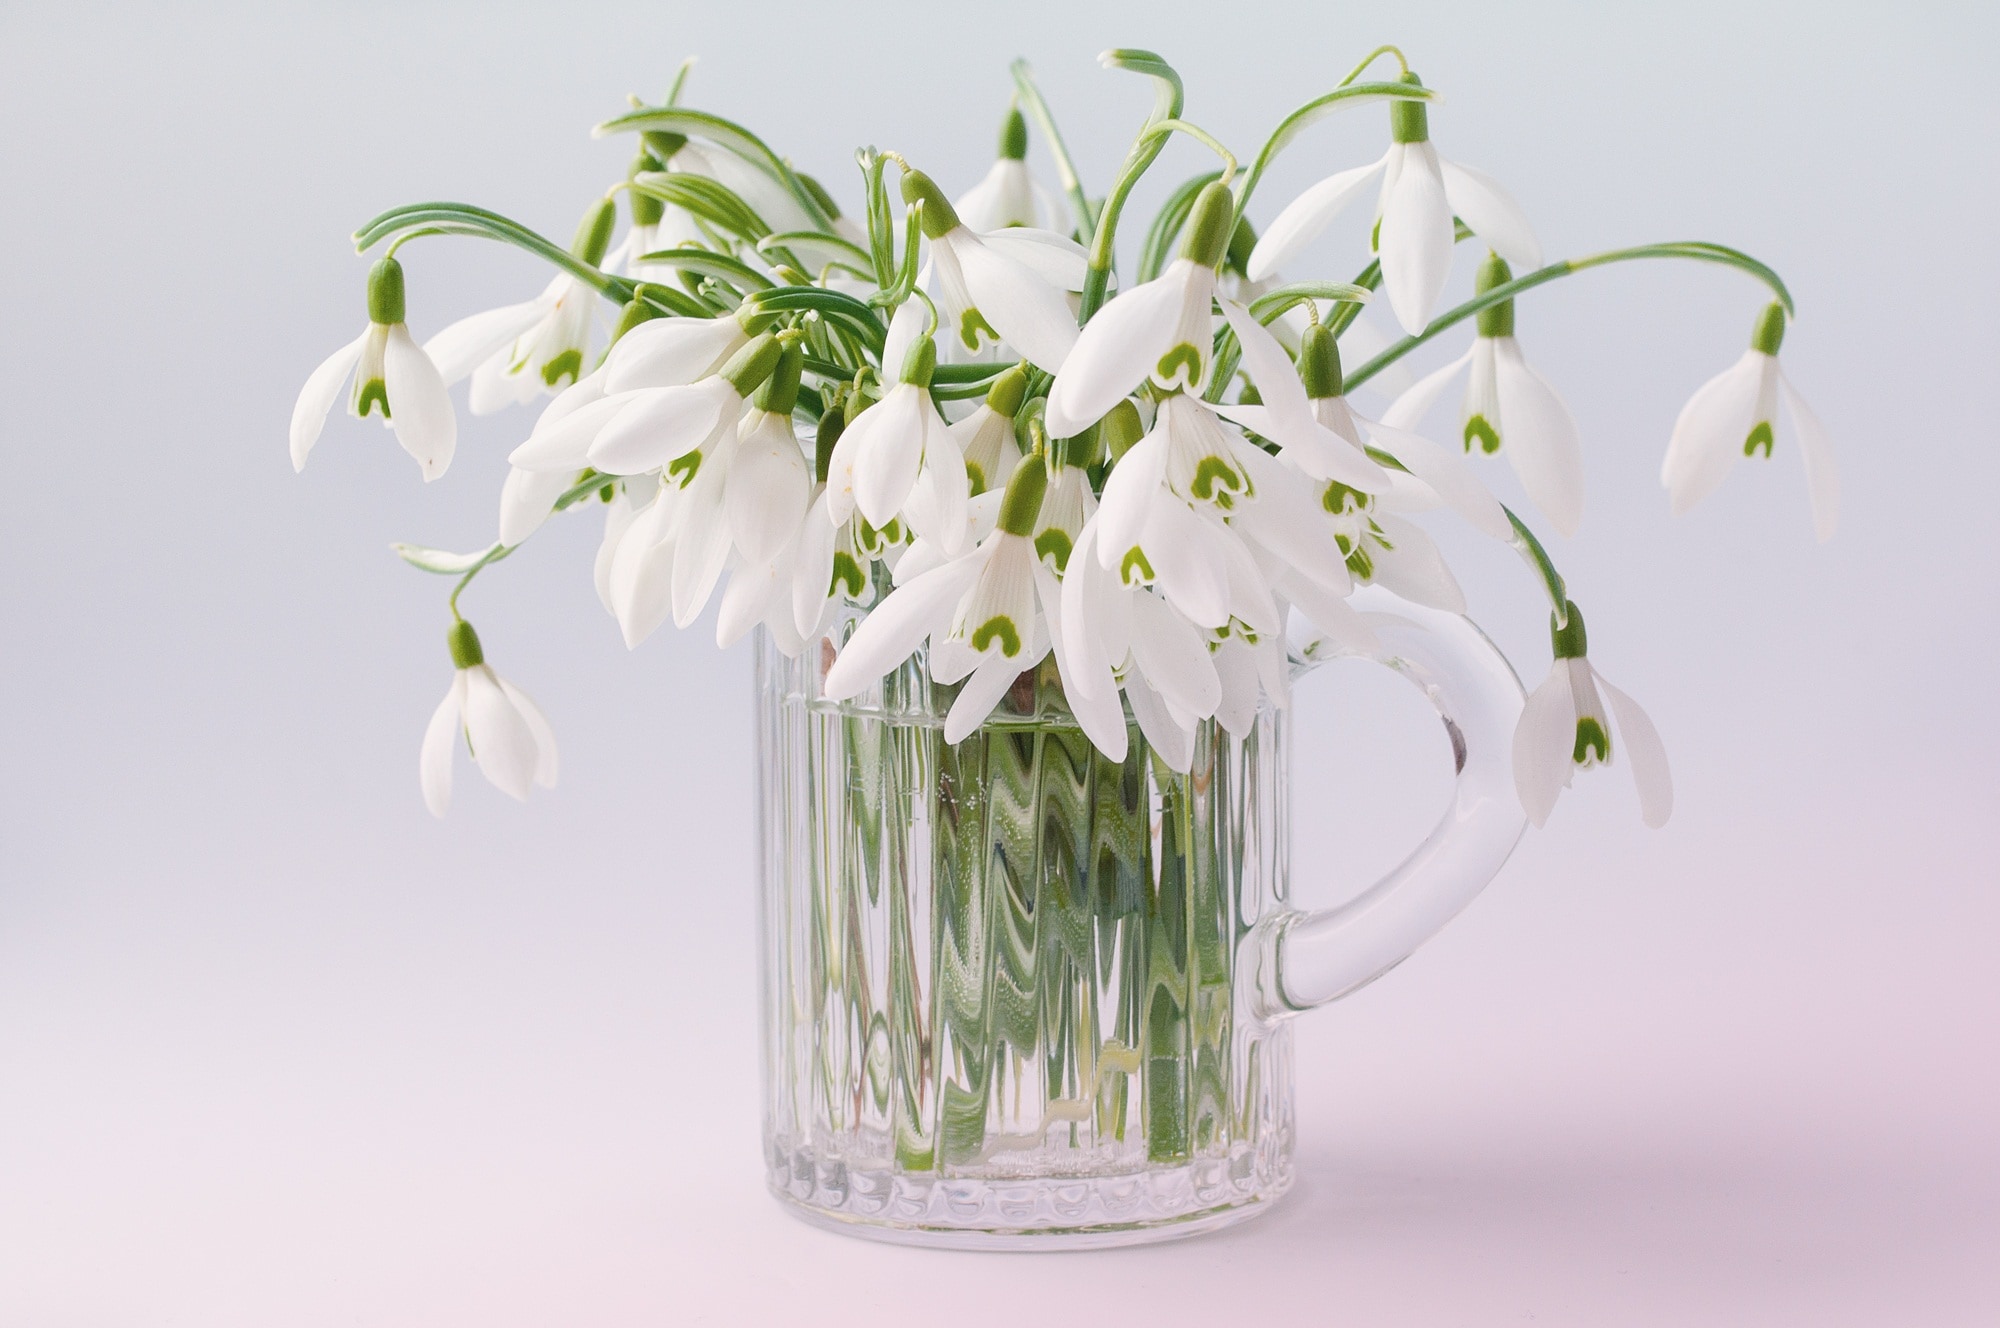 white petaled flowers in clear glass mug